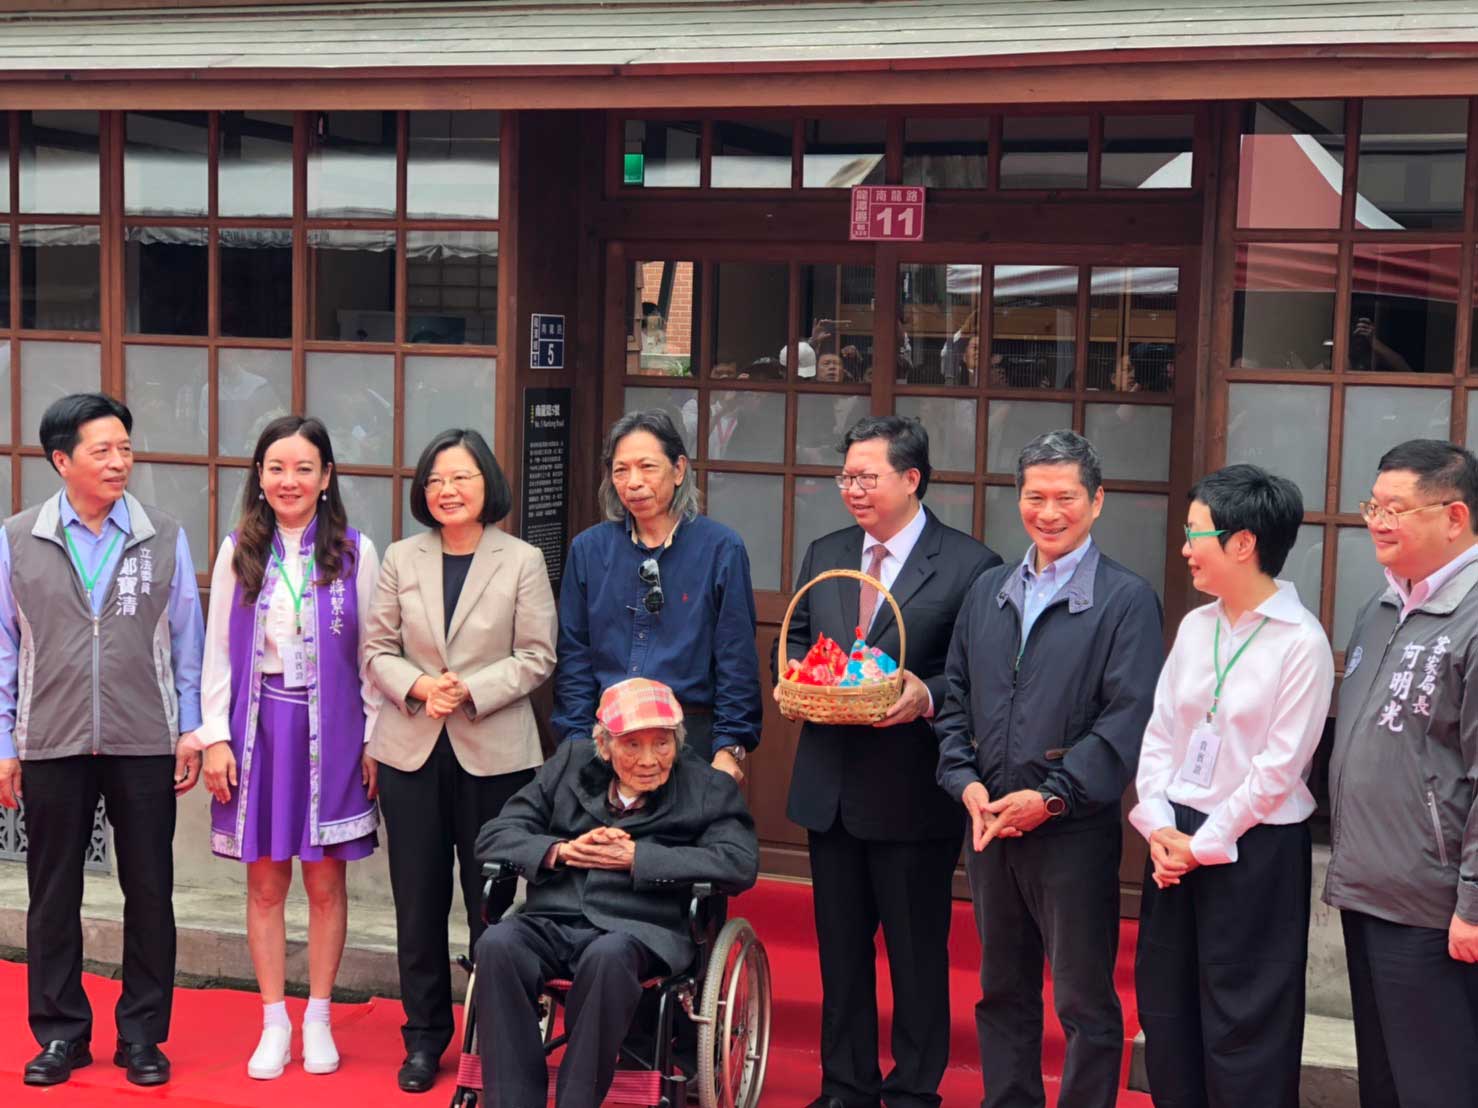 opening ceremony of Chung Chao-cheng Literary Park (鍾肇政文學生活園區).